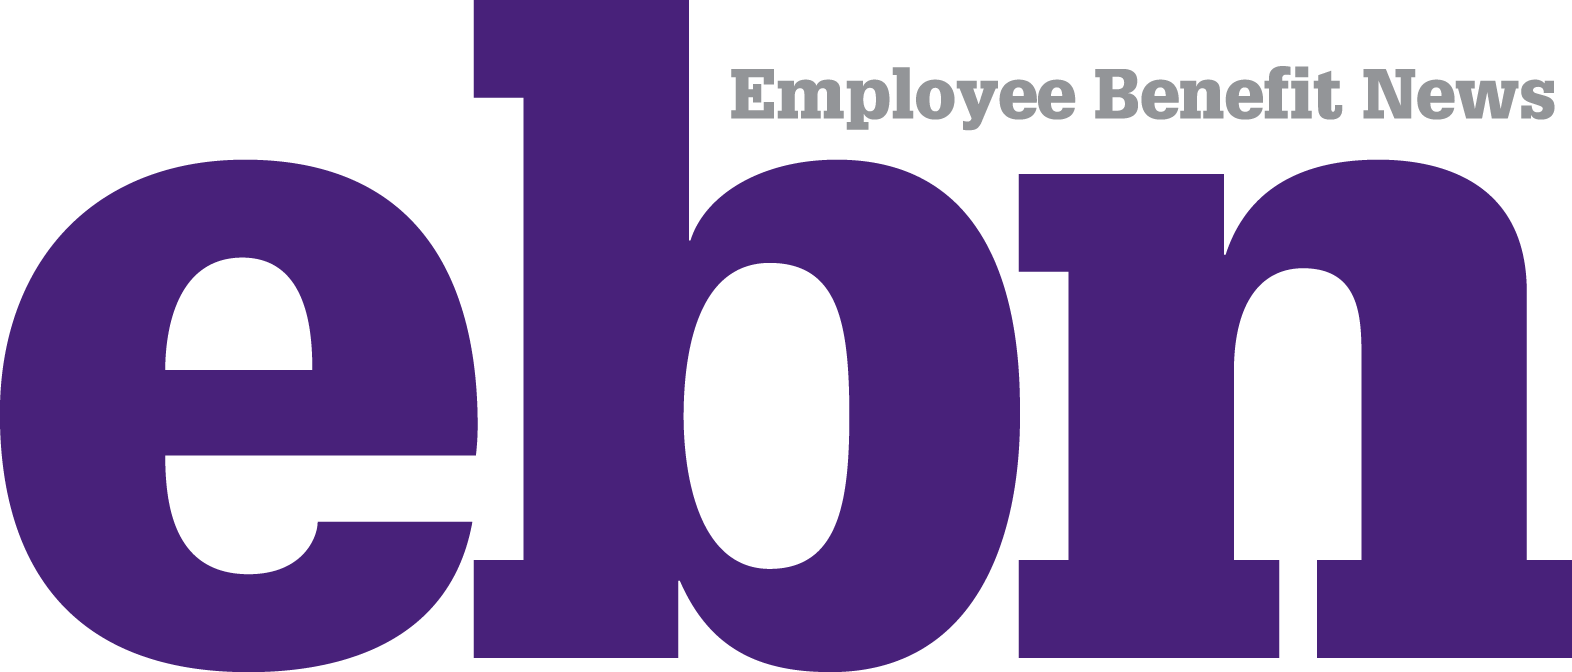 Employee Benefit News logo.